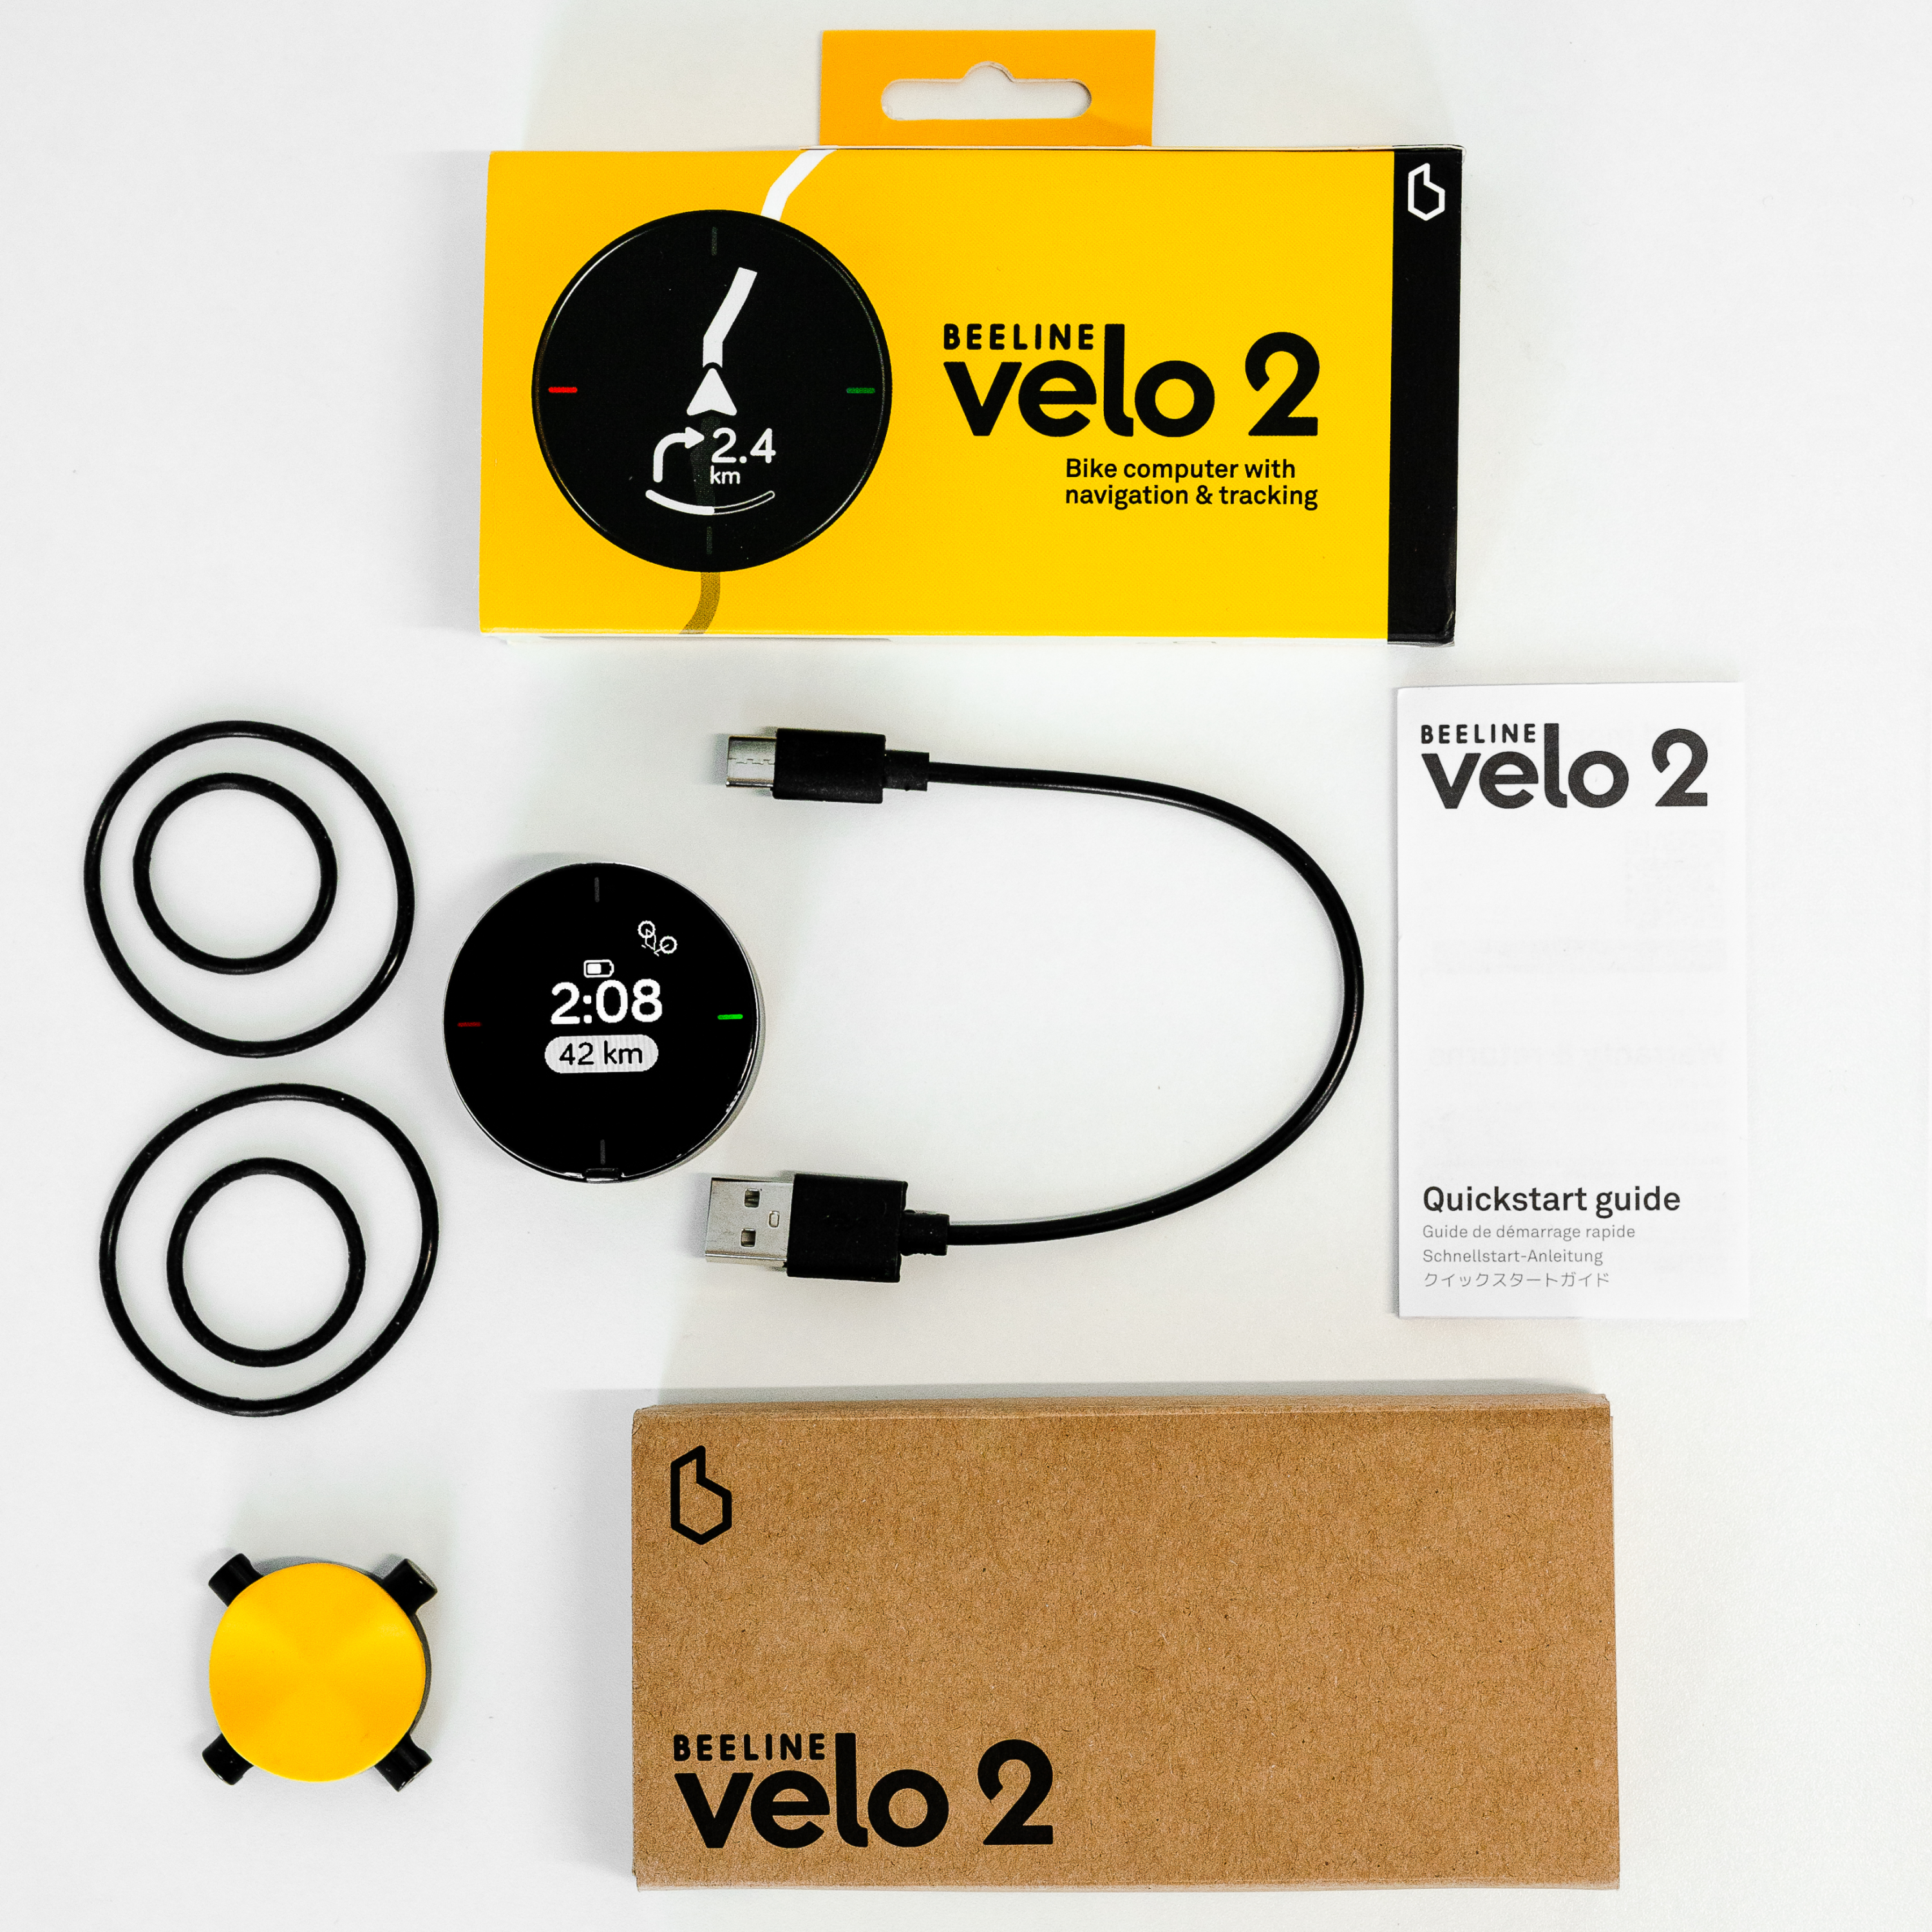 Beeline's Velo 2 keeps cycling navigation simple